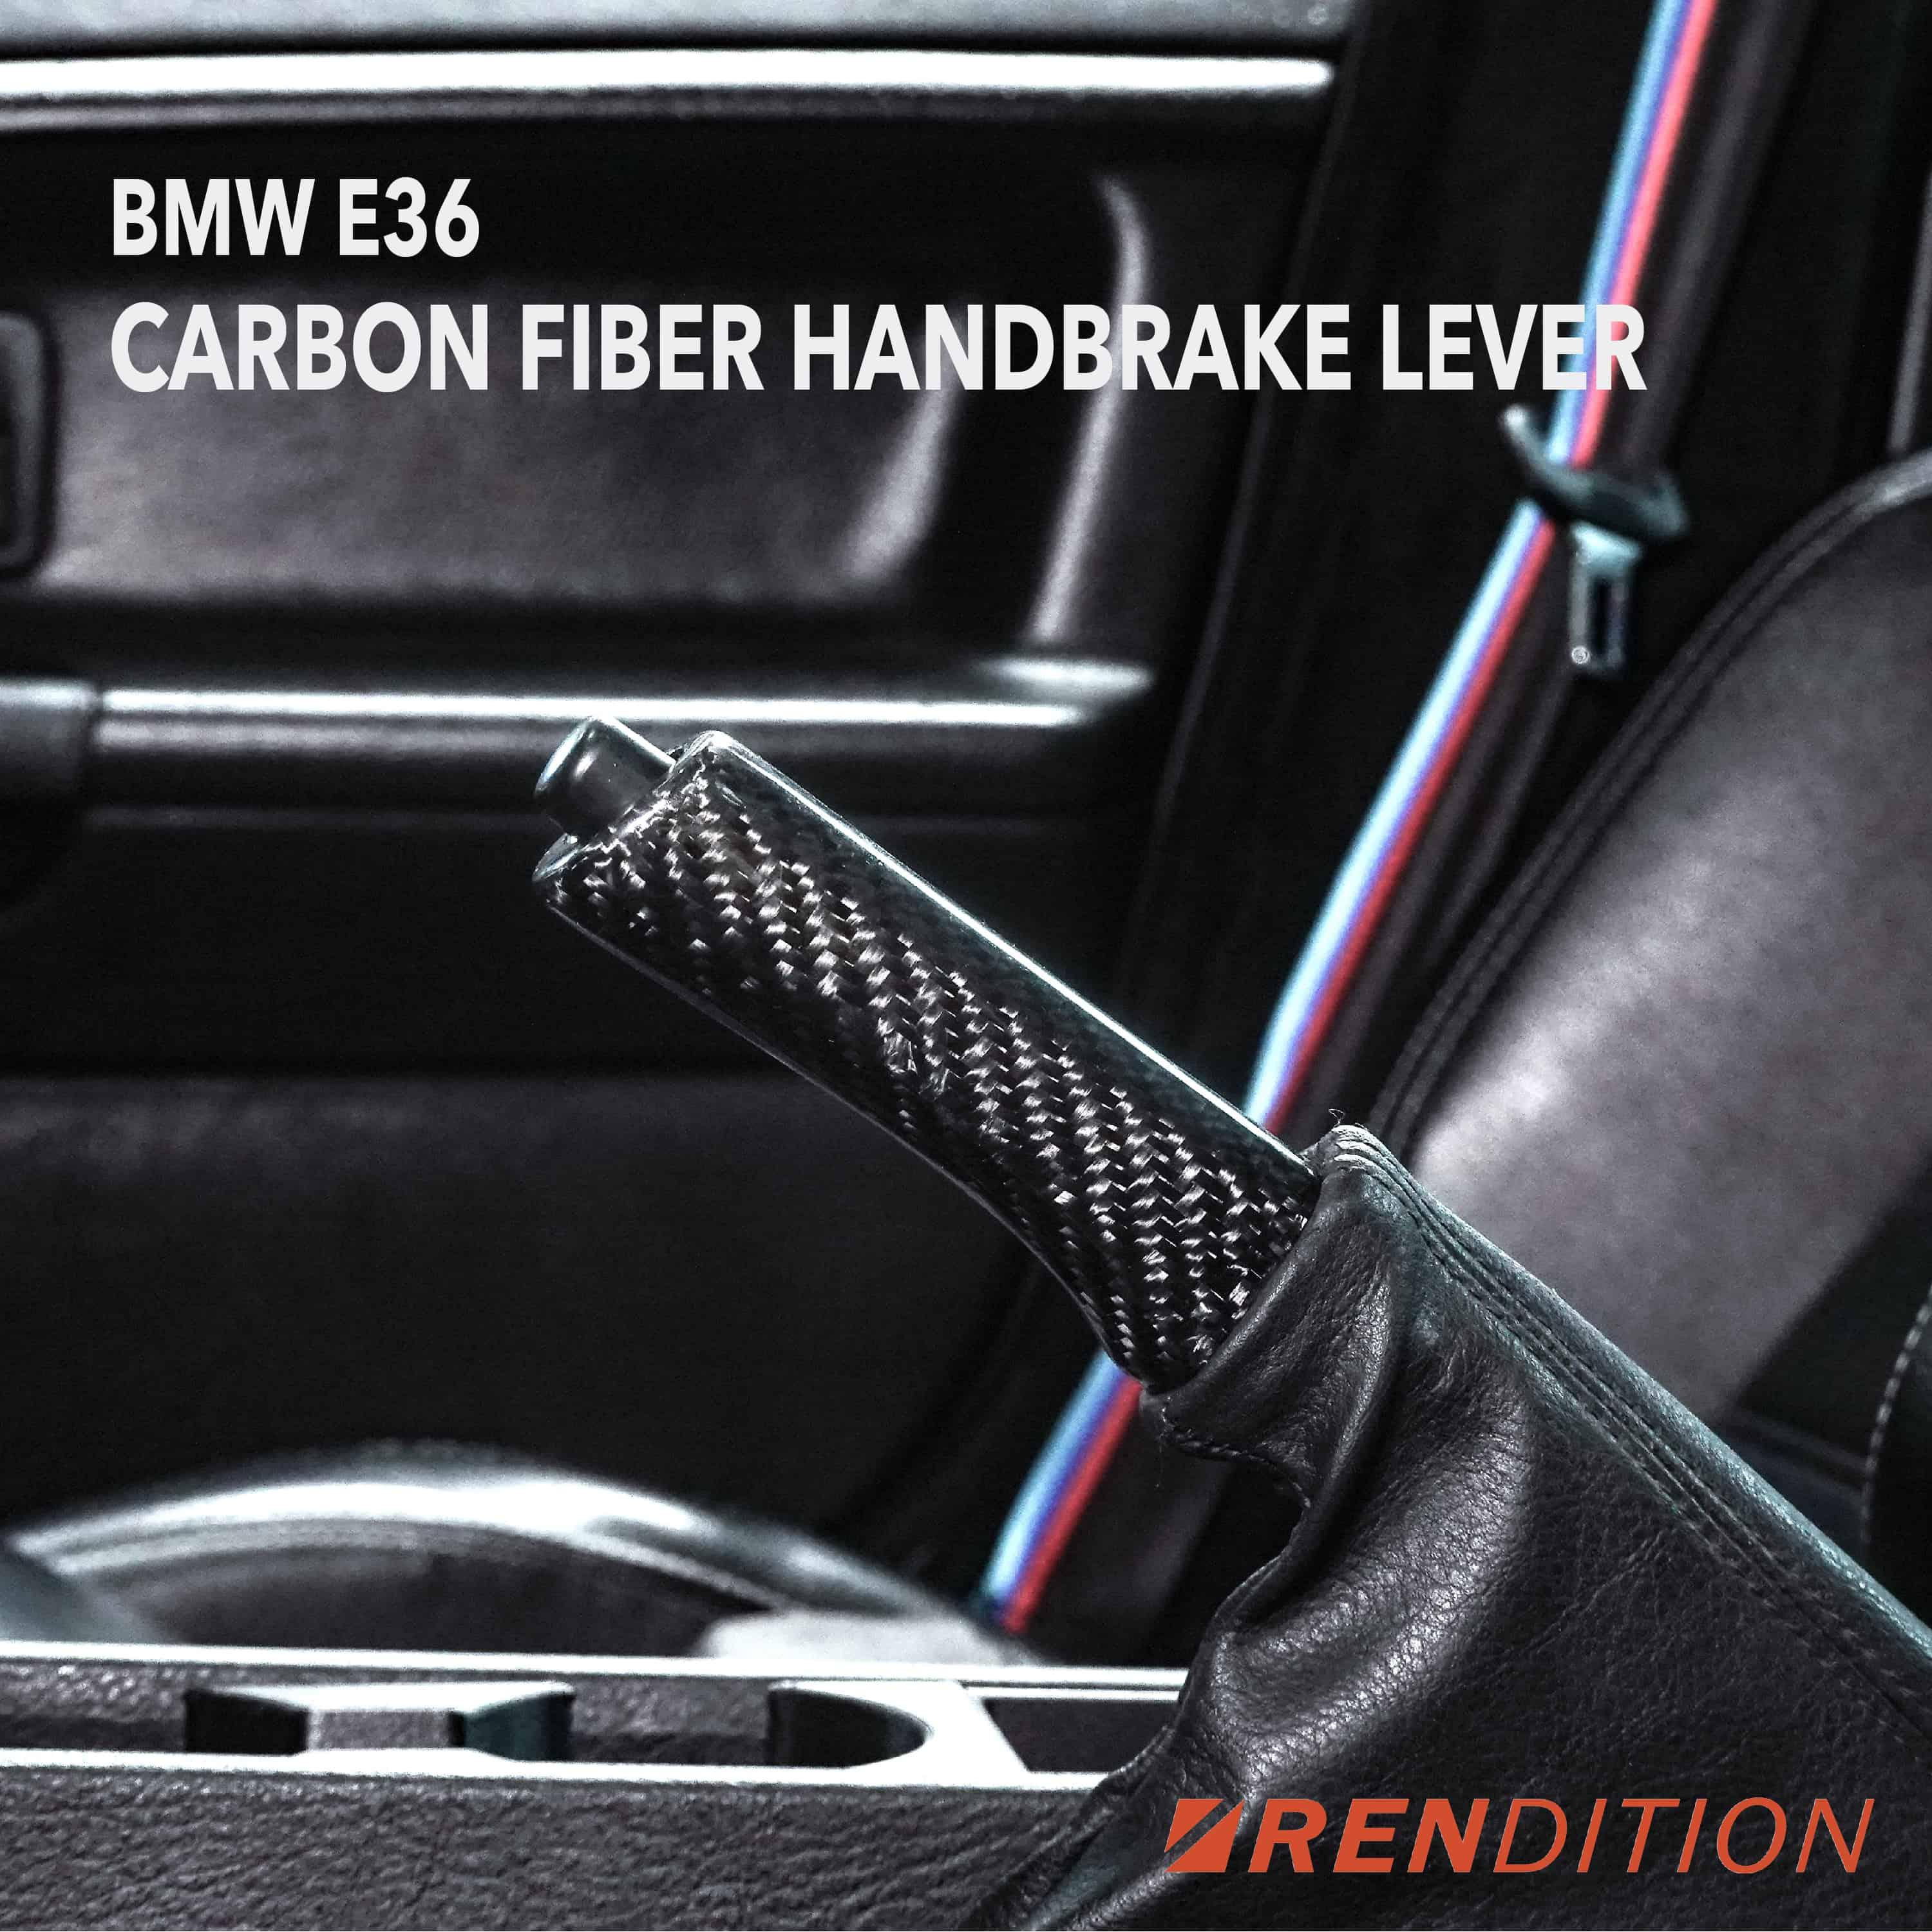 BMW E36 CARBON FIBER HANDBRAKE LEVER - K2 Industries